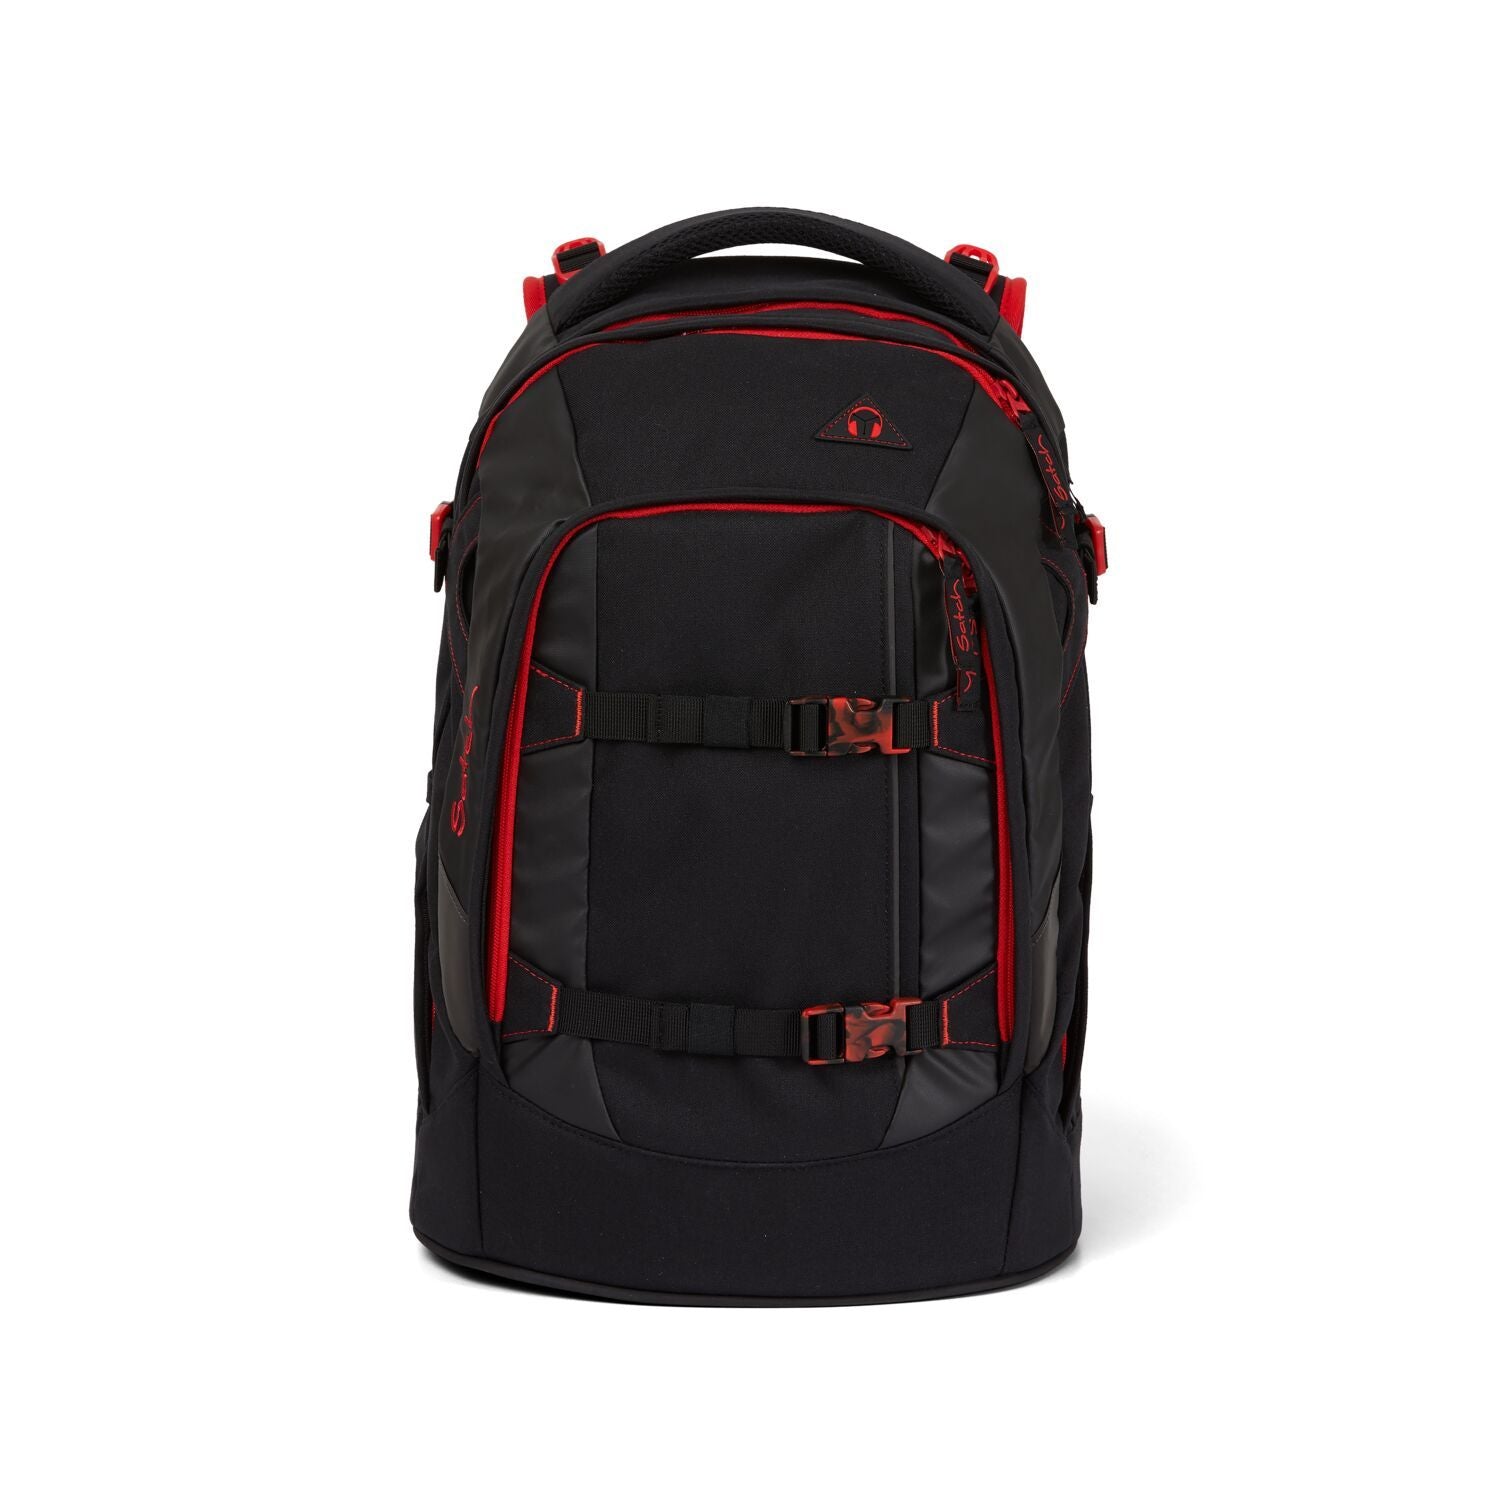 Satch Pack Fire Phantom ergonomic school backpack